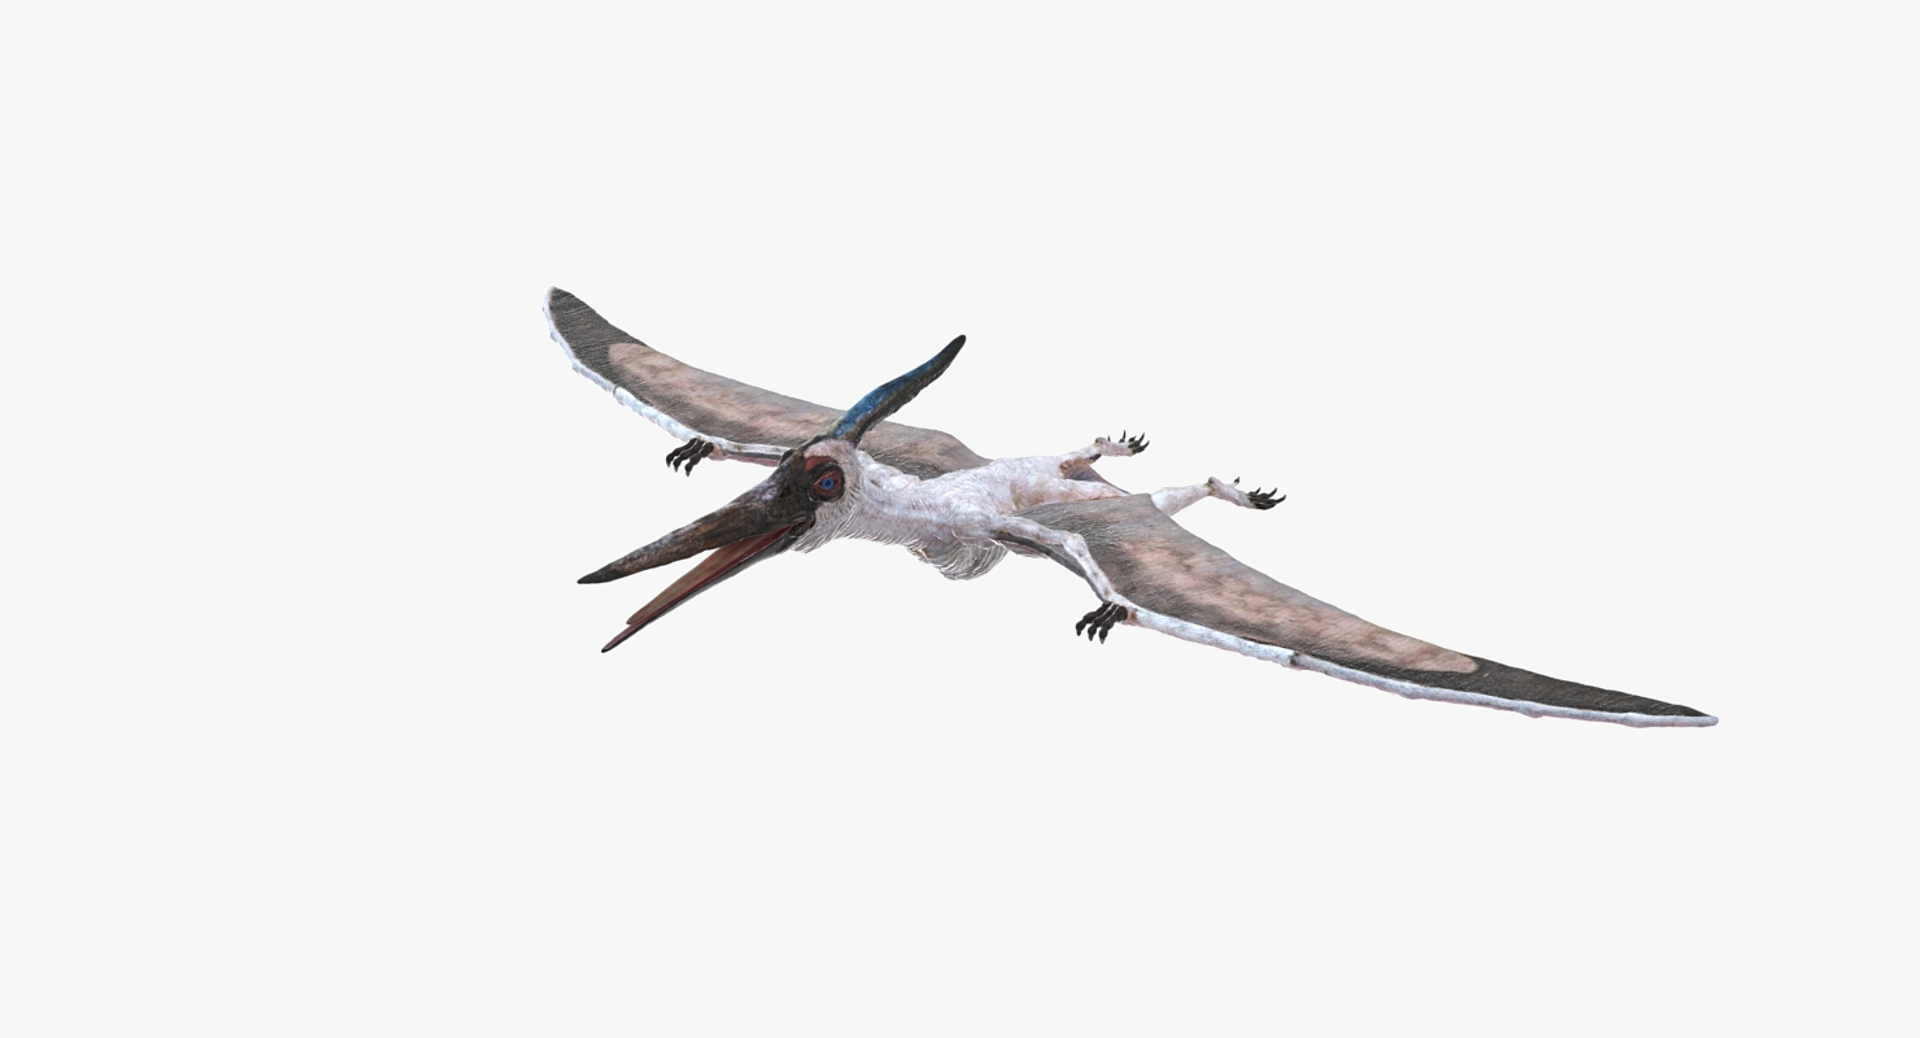 Dinosaur, Pteranodon, Pterodactyl, 3D Computer Graphics, Pterosaurs, Plant  transparent background PNG clipart